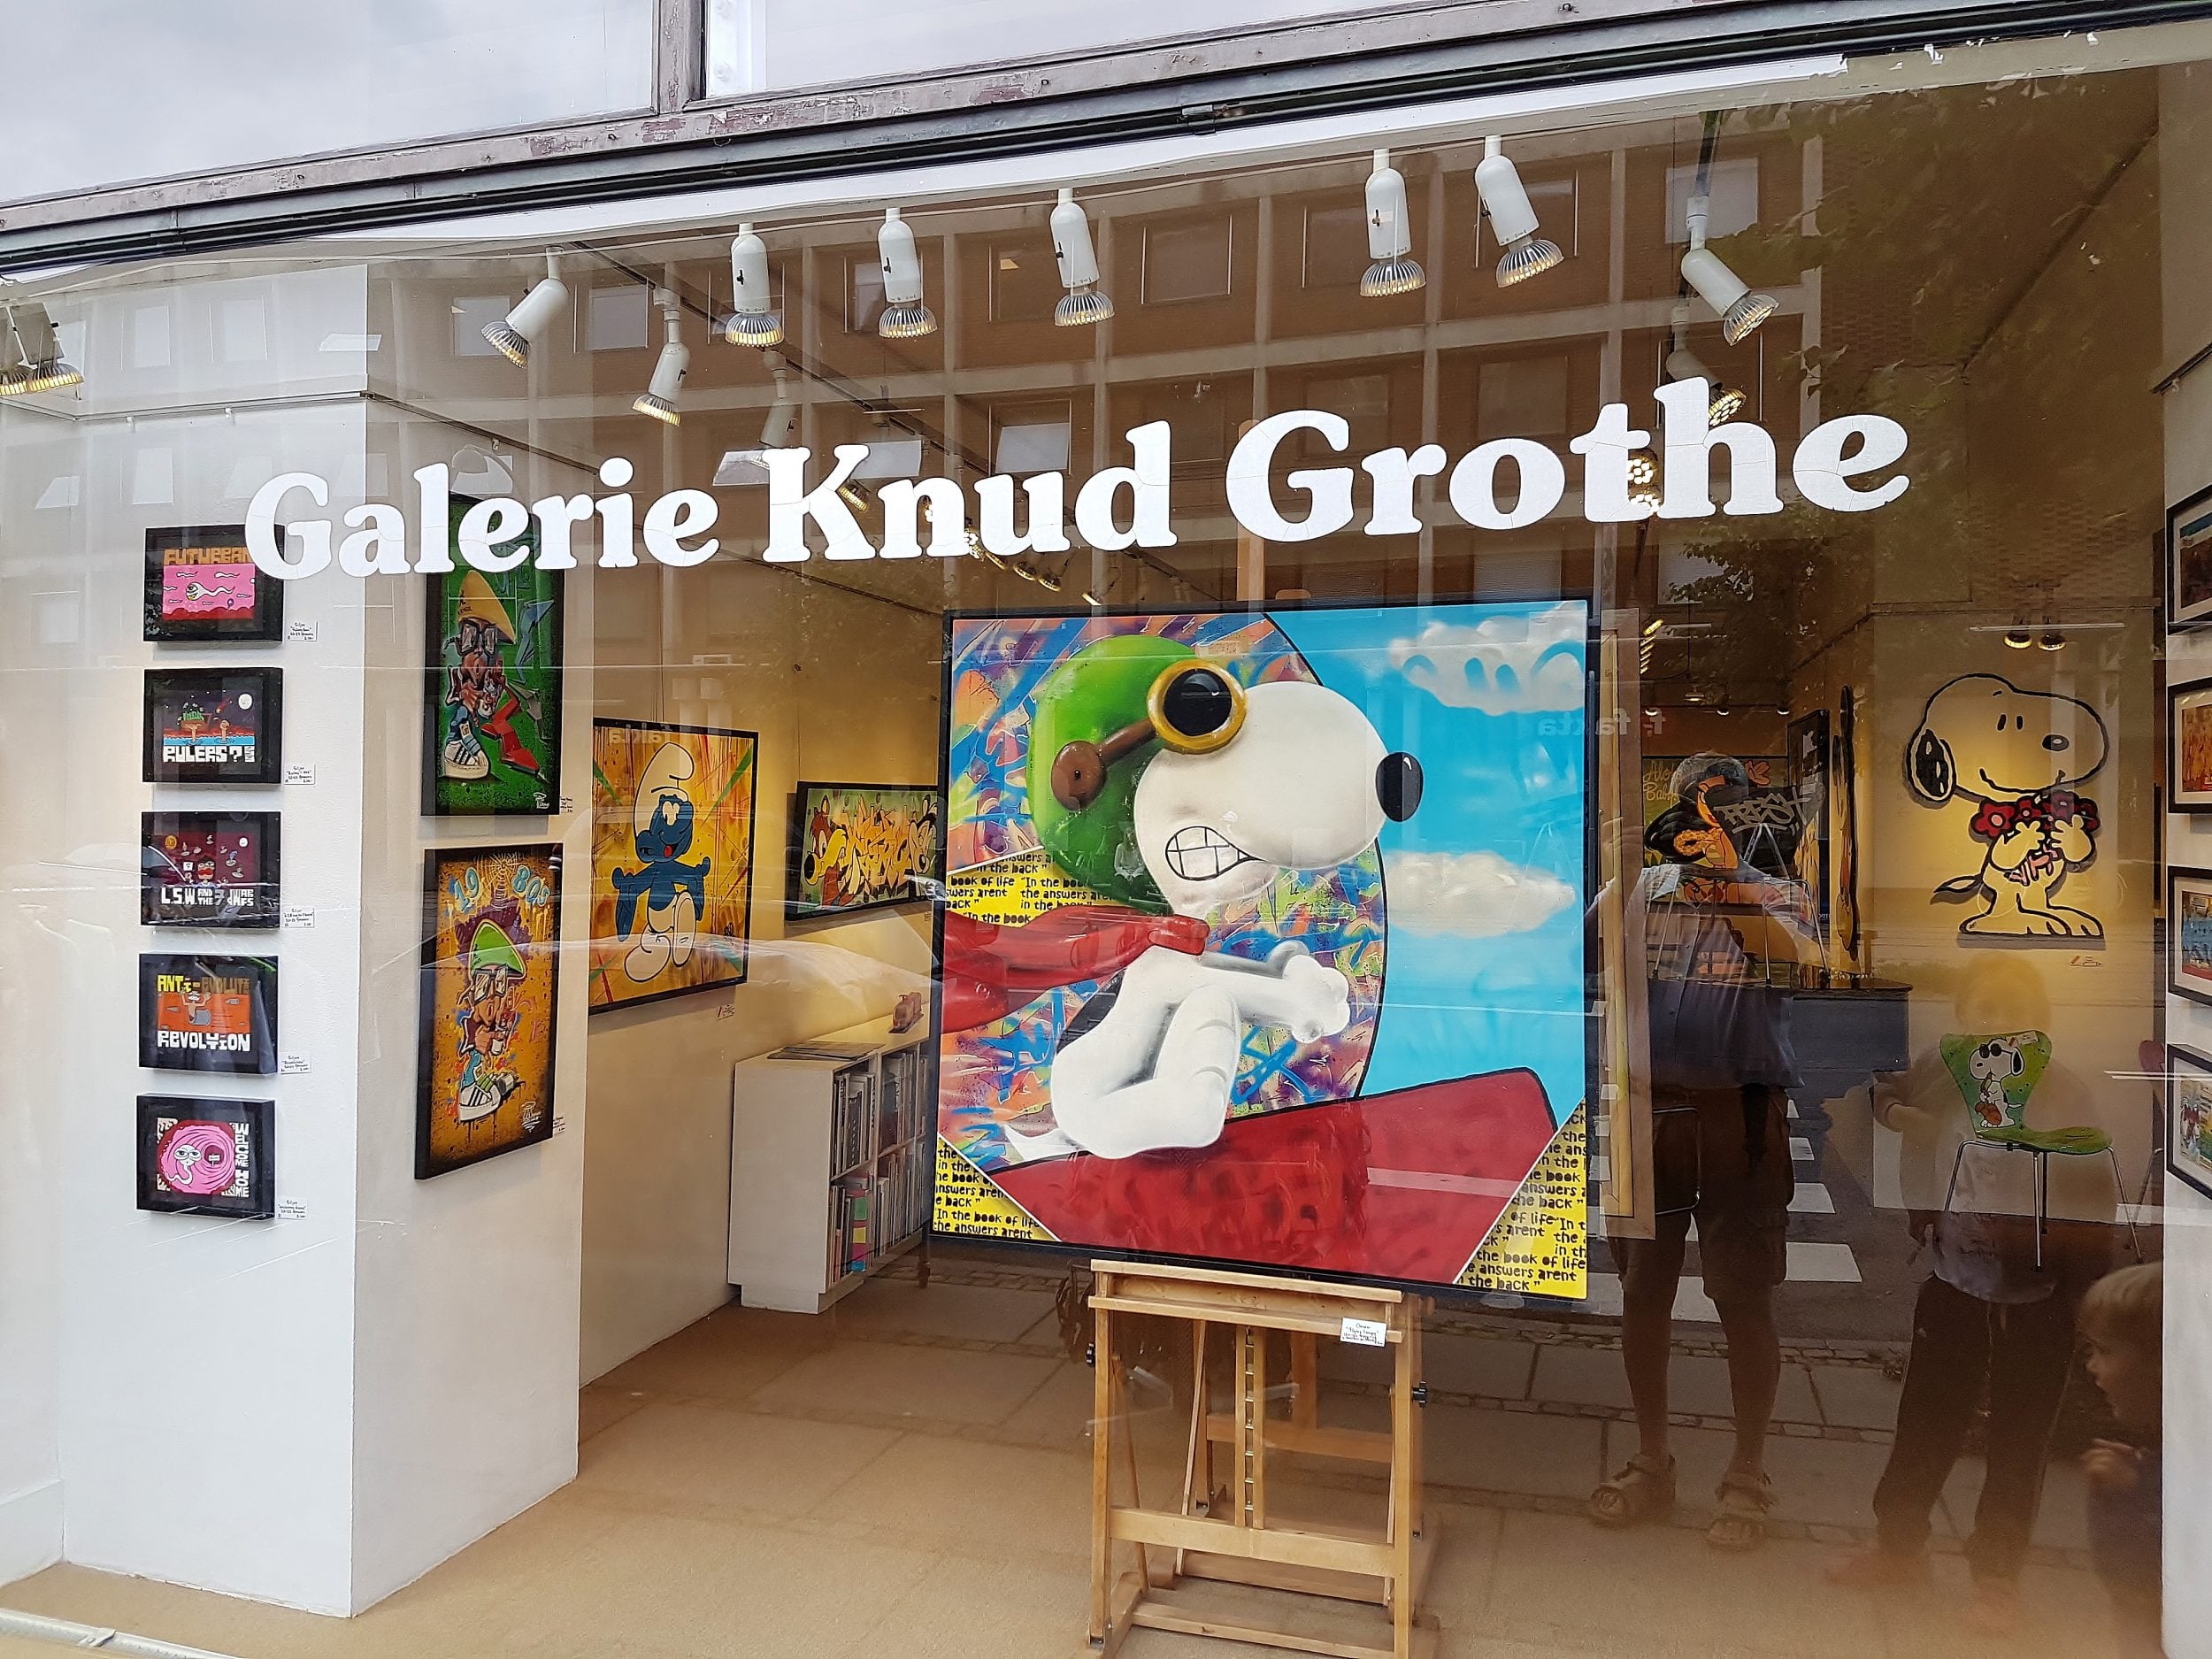 Fernisering hos Galerie Knud Grothe